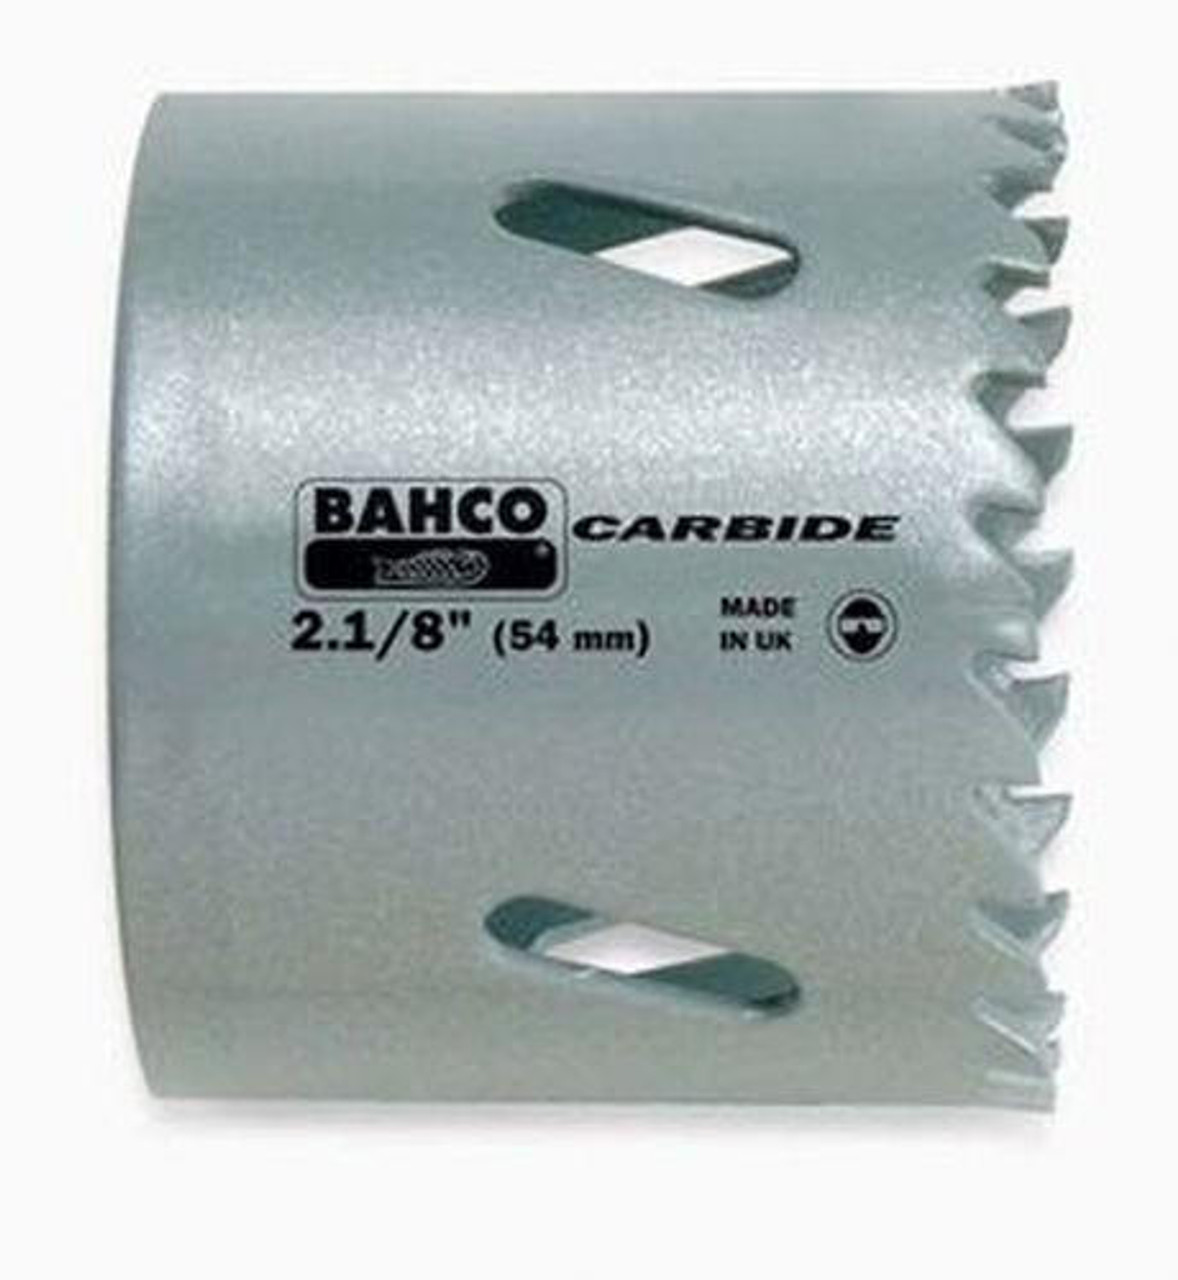 Bahco 2 5/16" Bahco Carbide-Tip Holesaw - 3832-59 